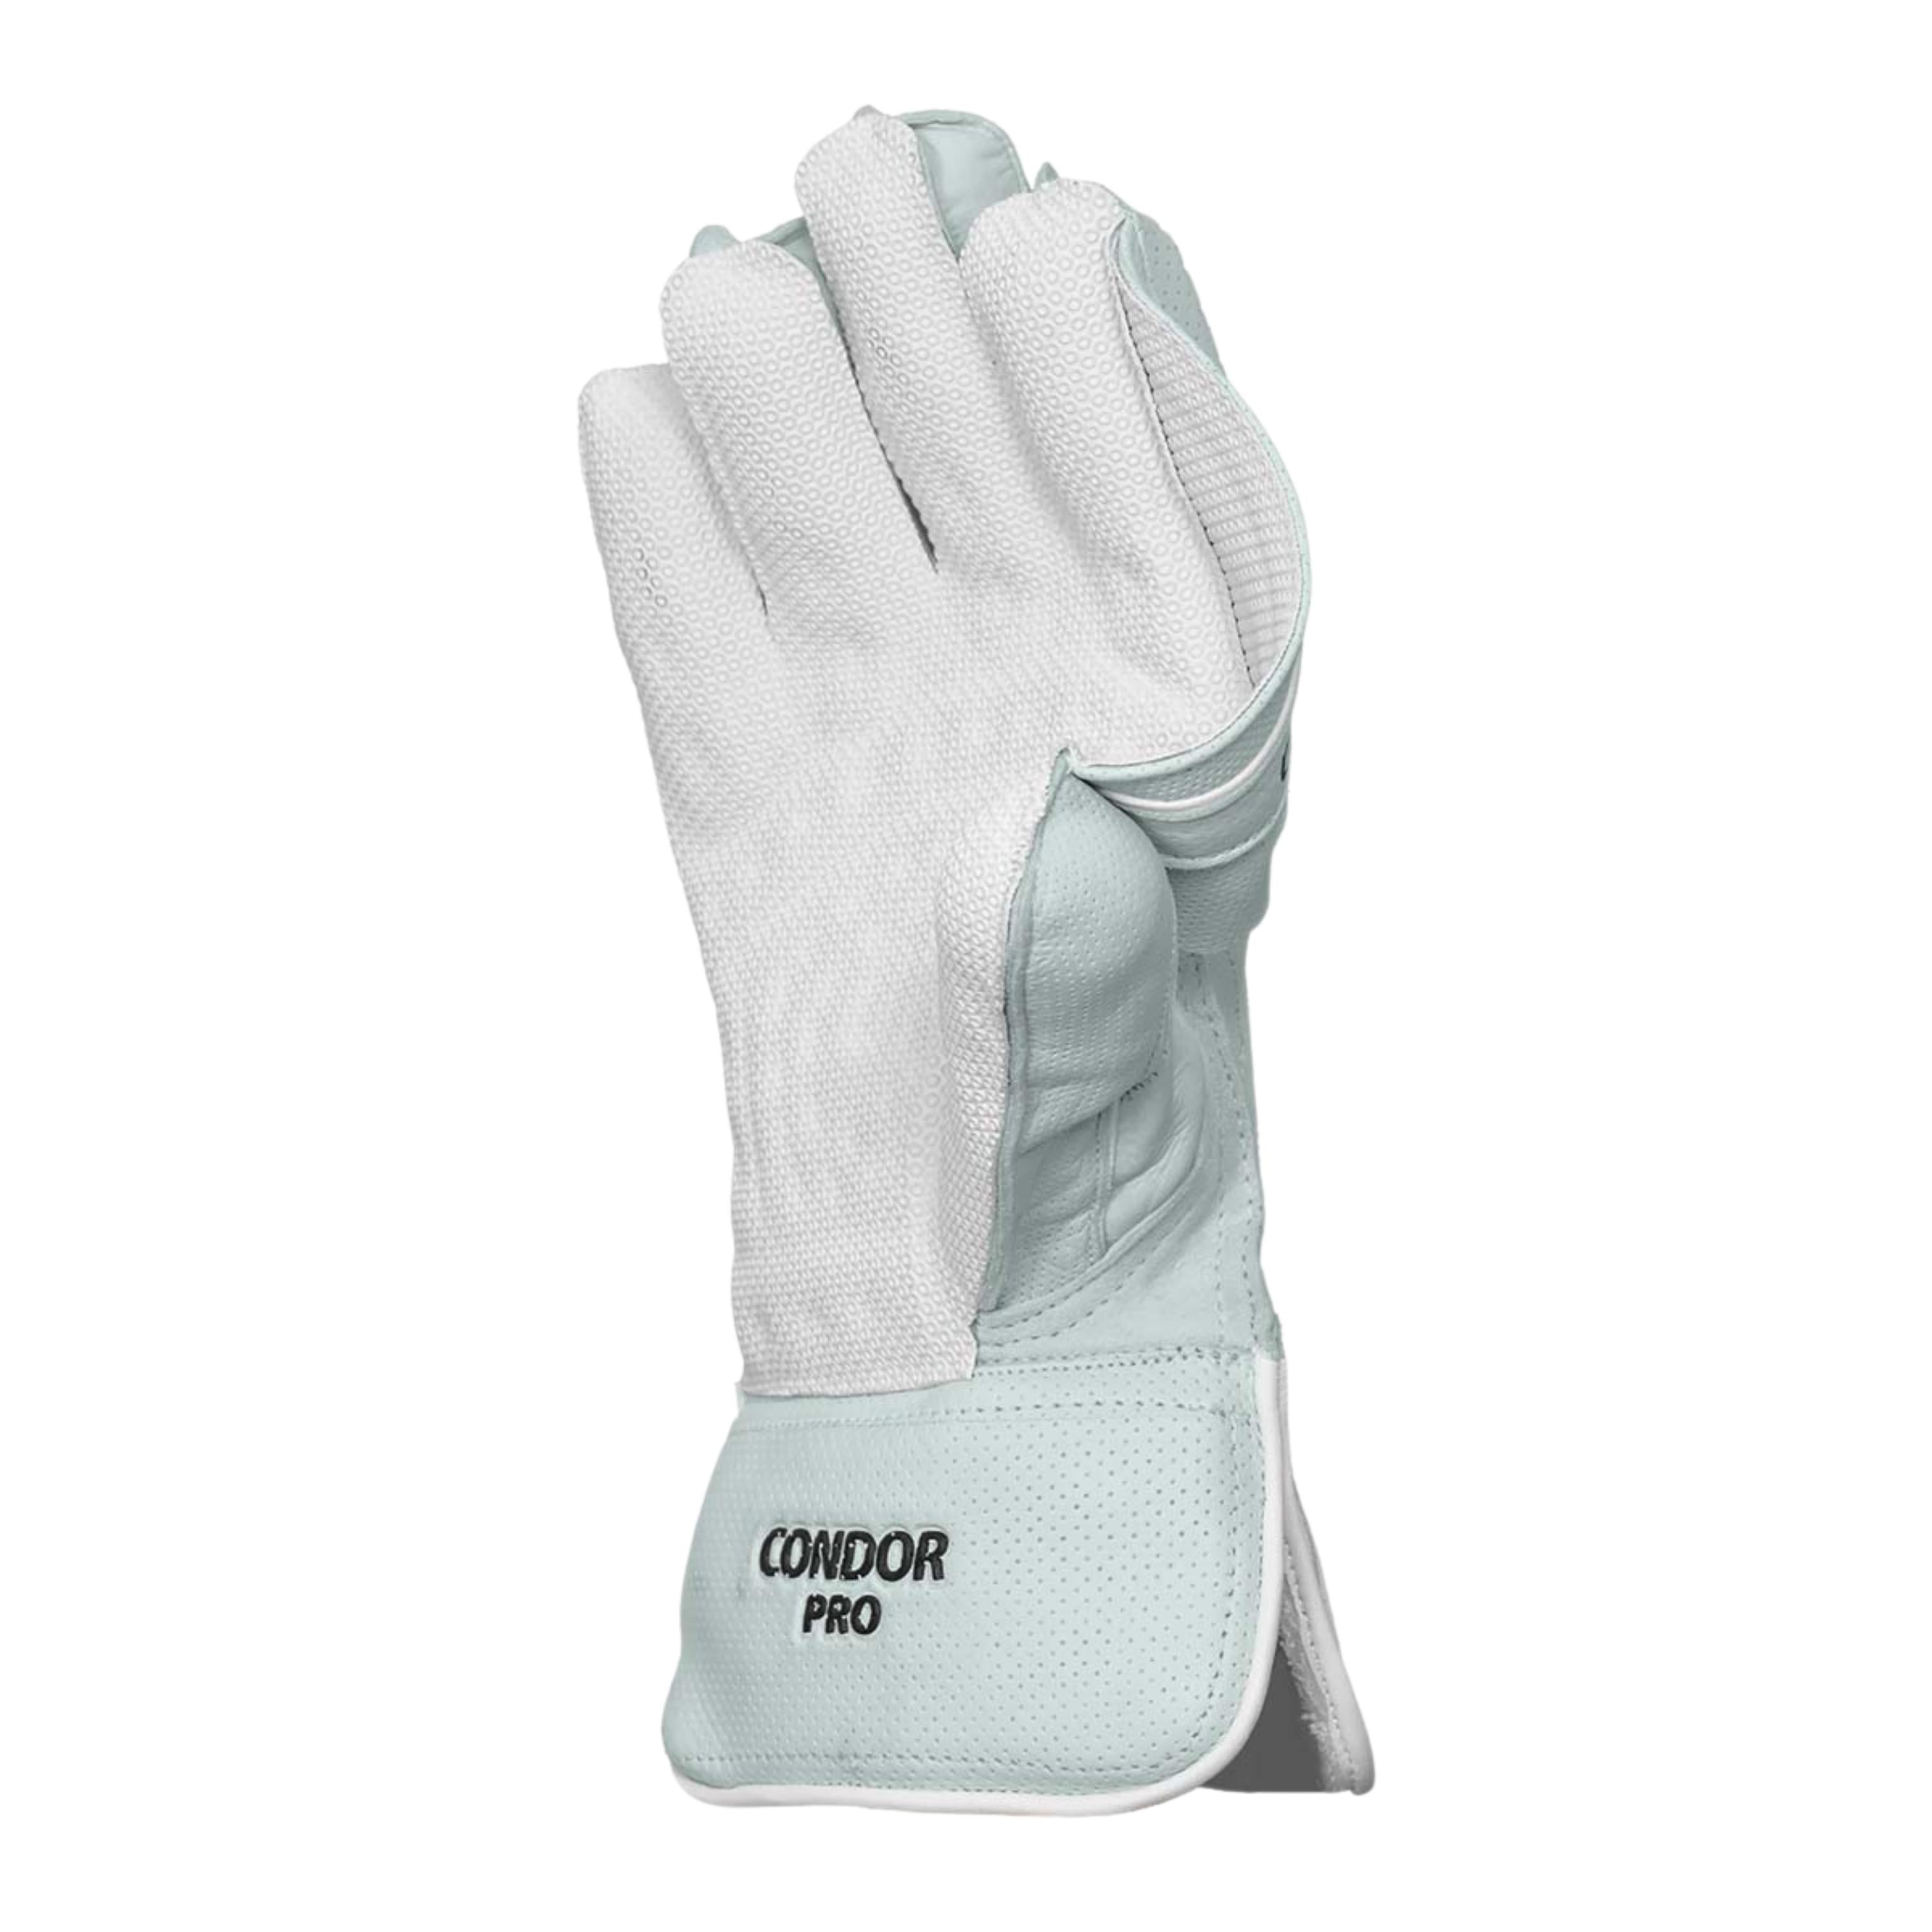 DSC Wicket Keeping Gloves Condor Pro